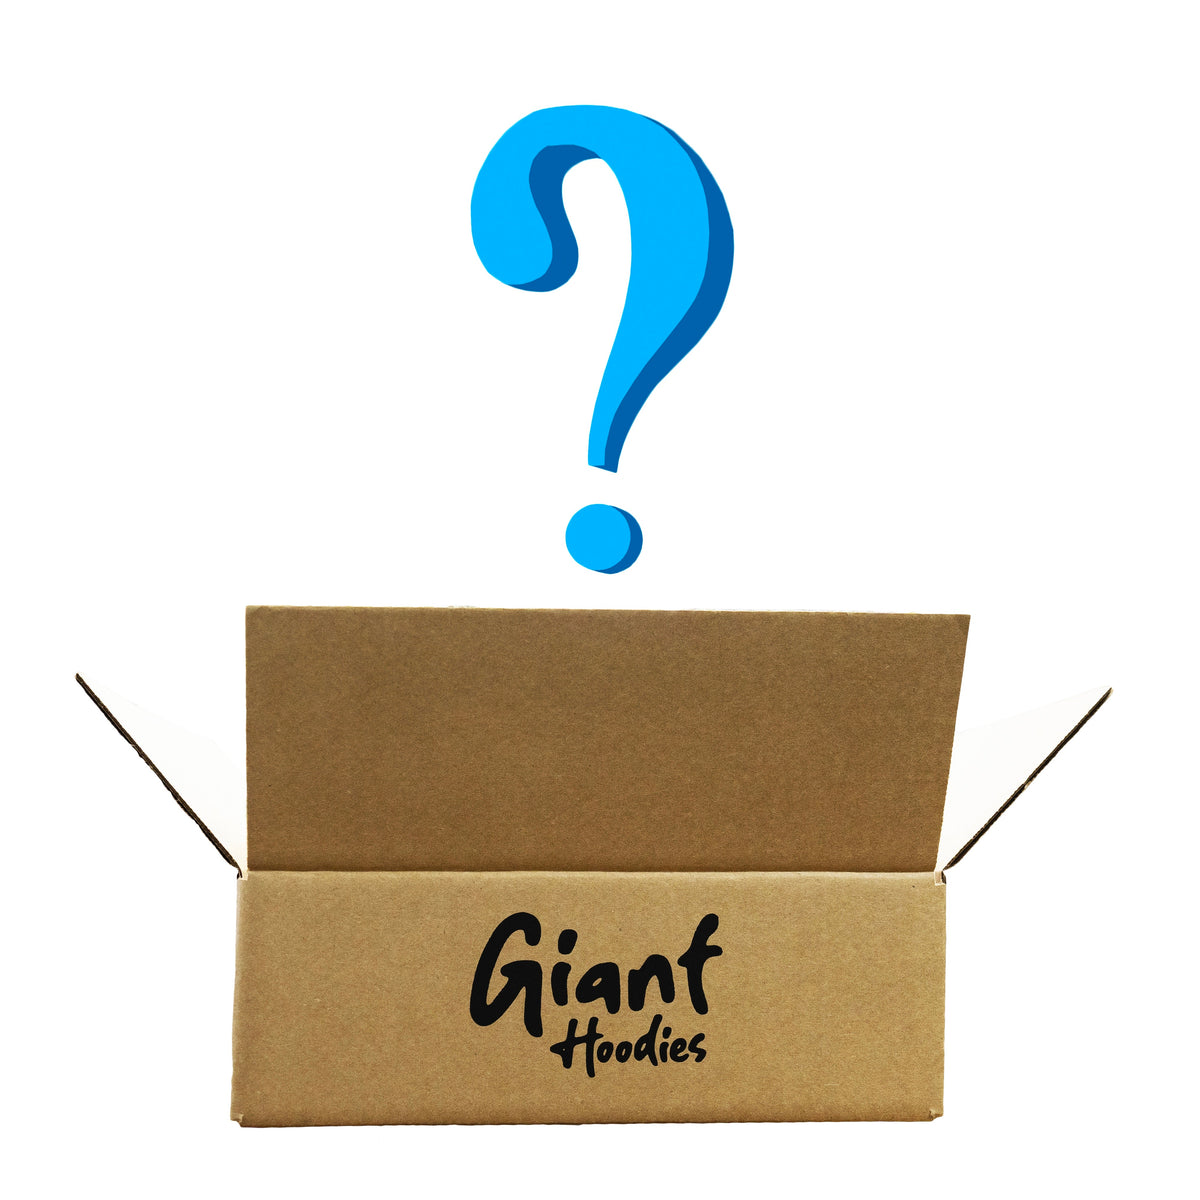 Giant Hoodie Mystery Box Messups - The Original - Giant Hoodies